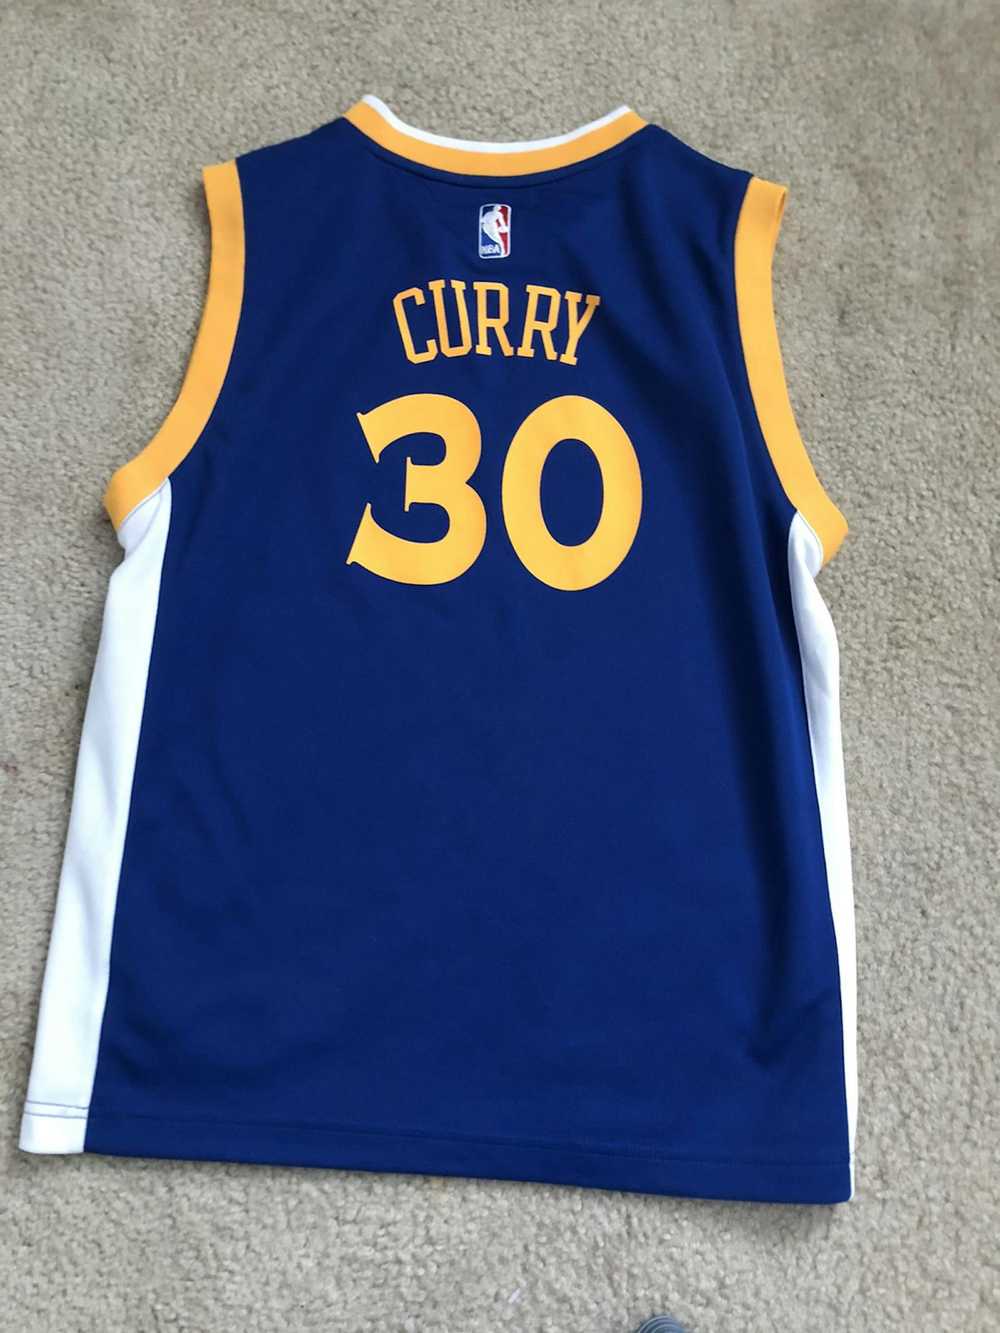 Adidas × NBA Curry 30 Royal Jersey Size S - image 2